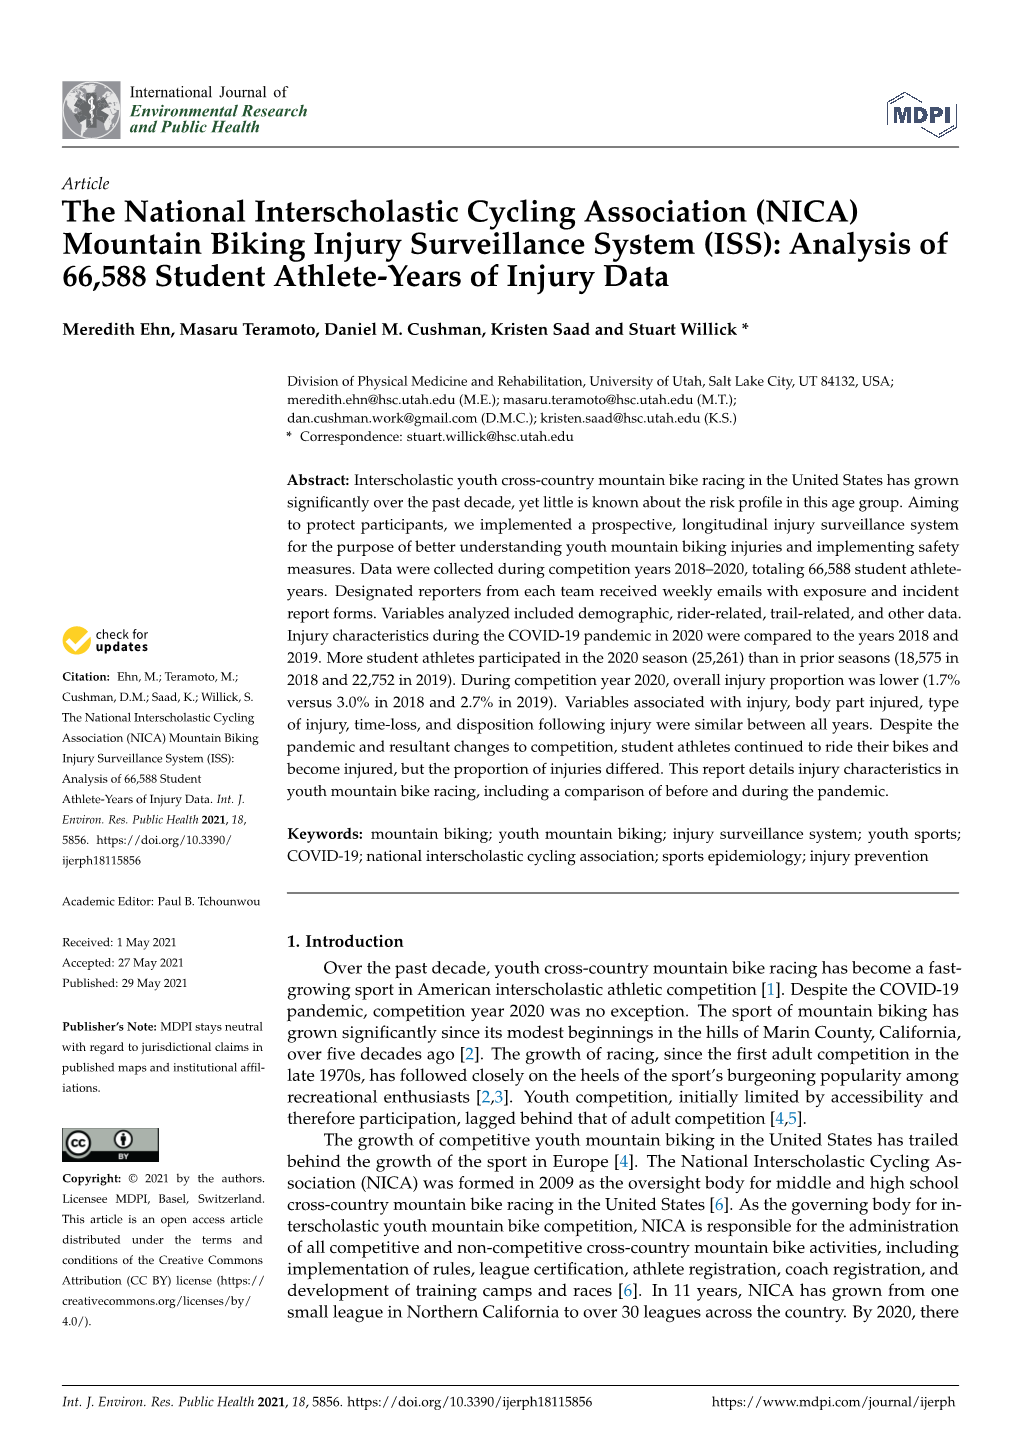 (NICA) Mountain Biking Injury Surveillance System (ISS): Analysis of 66,588 Student Athlete-Years of Injury Data